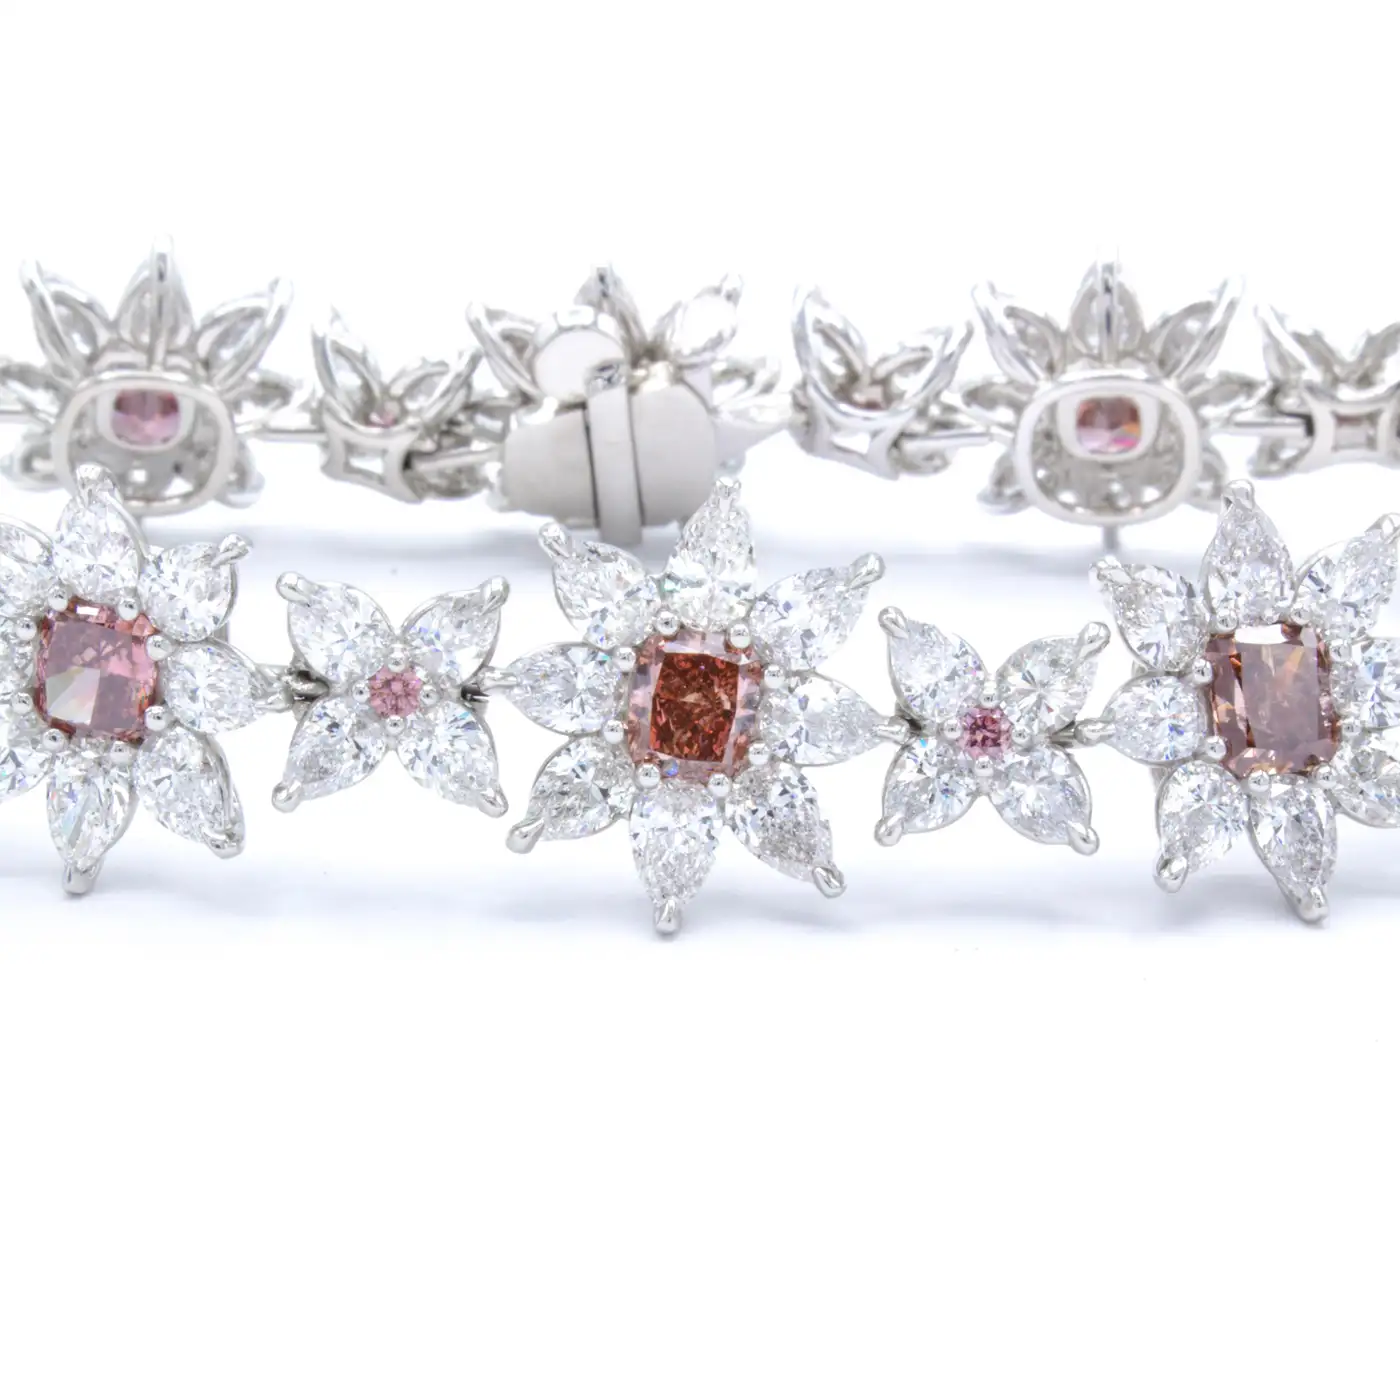 David-Rosenberg-13-Carat-Fancy-Deep-PinkOrangy-Pink-Argyle-GIA-Diamond-Bracelet-4.webp